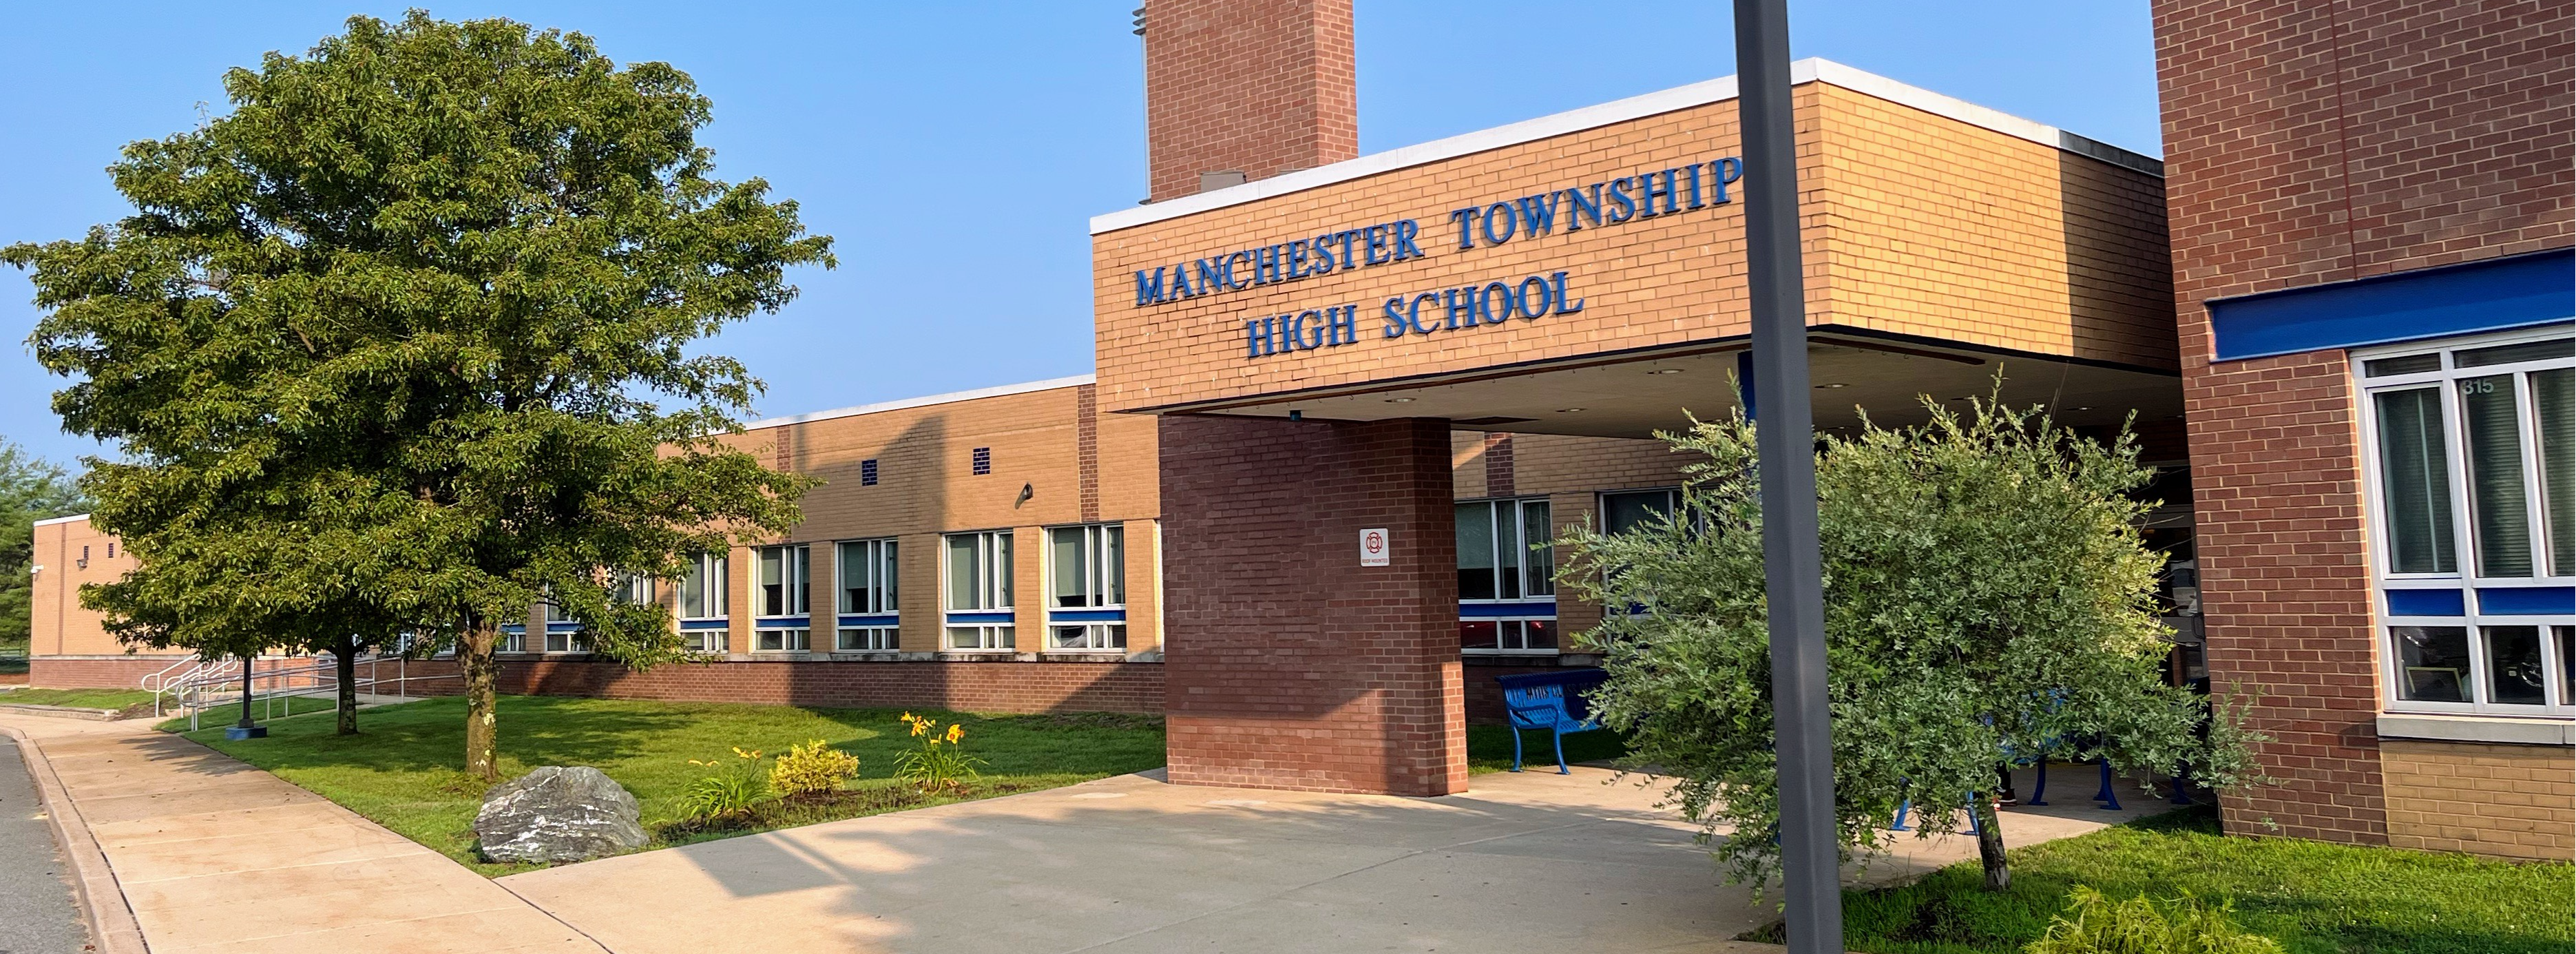 Manchester Township High School Exterior